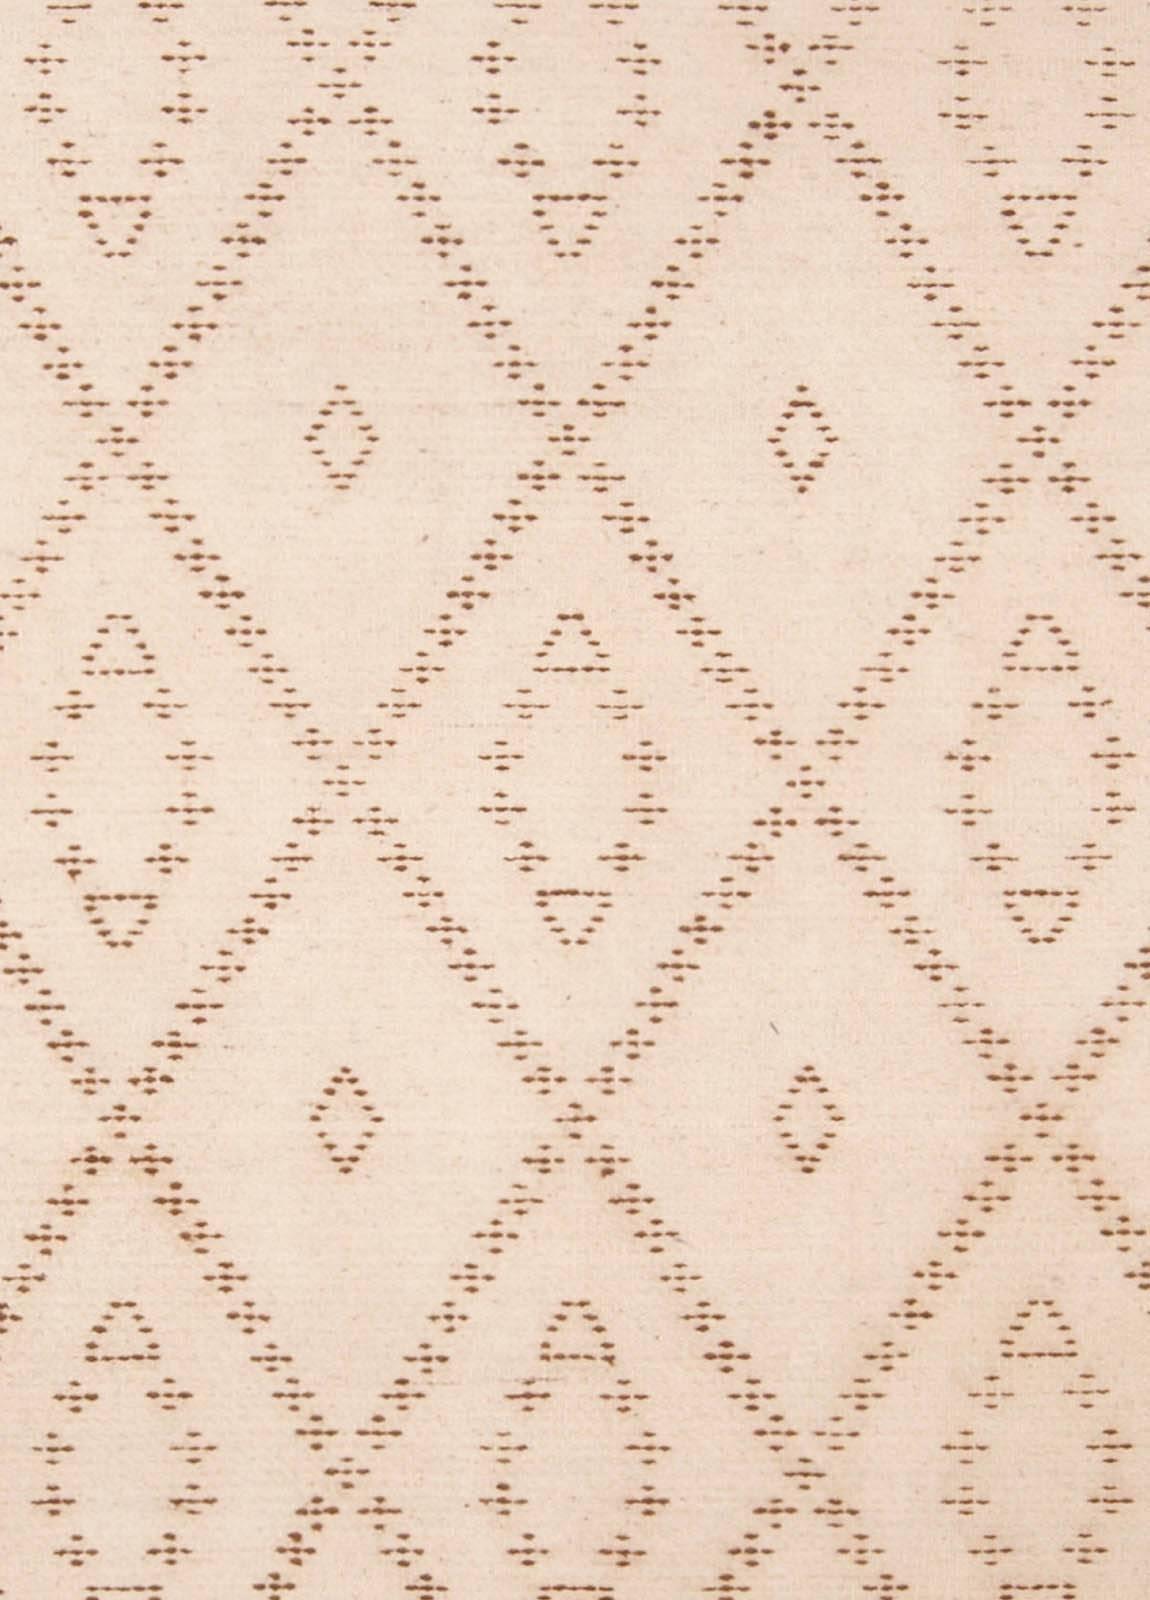 Modern Moroccan tazo design beige handmade wool rug by Doris Leslie Blau.
Size: 8'0